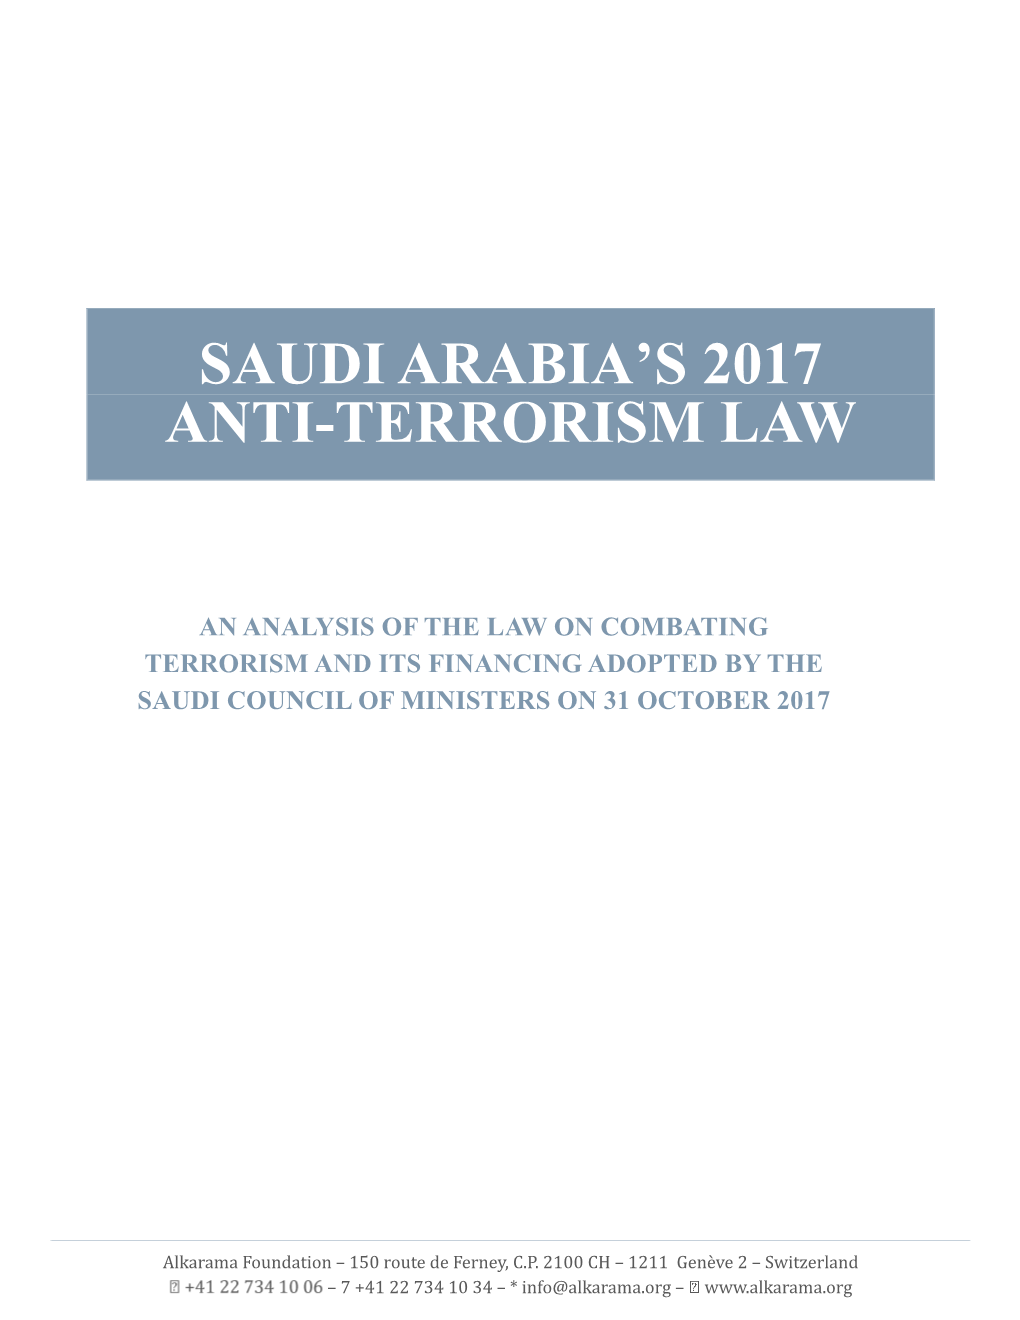 Saudi Arabia's 2017 Anti-Terrorism